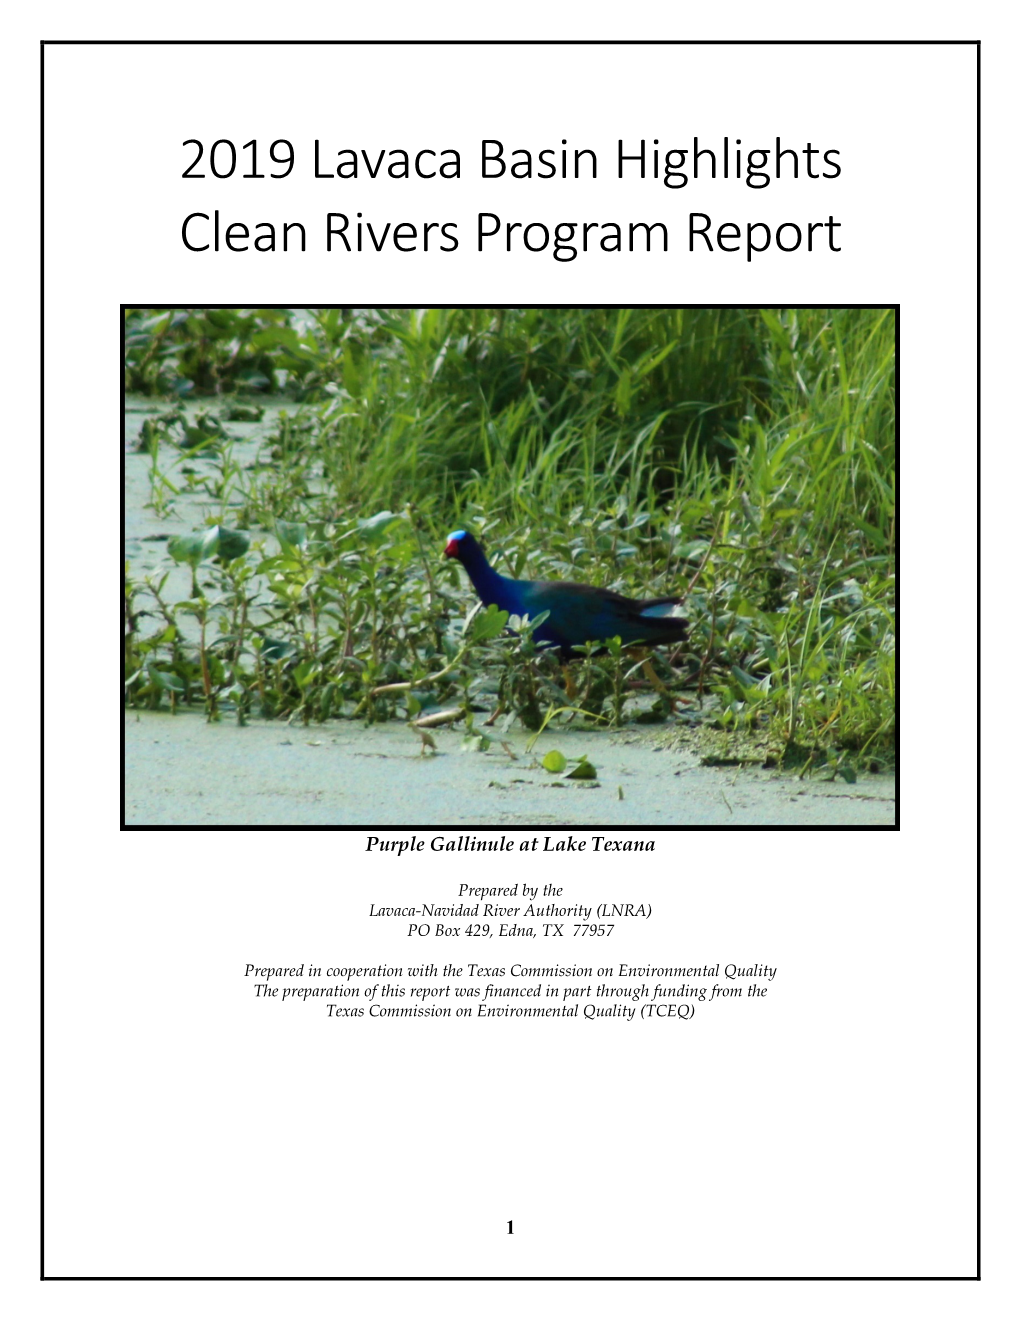 2019 Lavaca Basin Highlights Clean Rivers Program Report